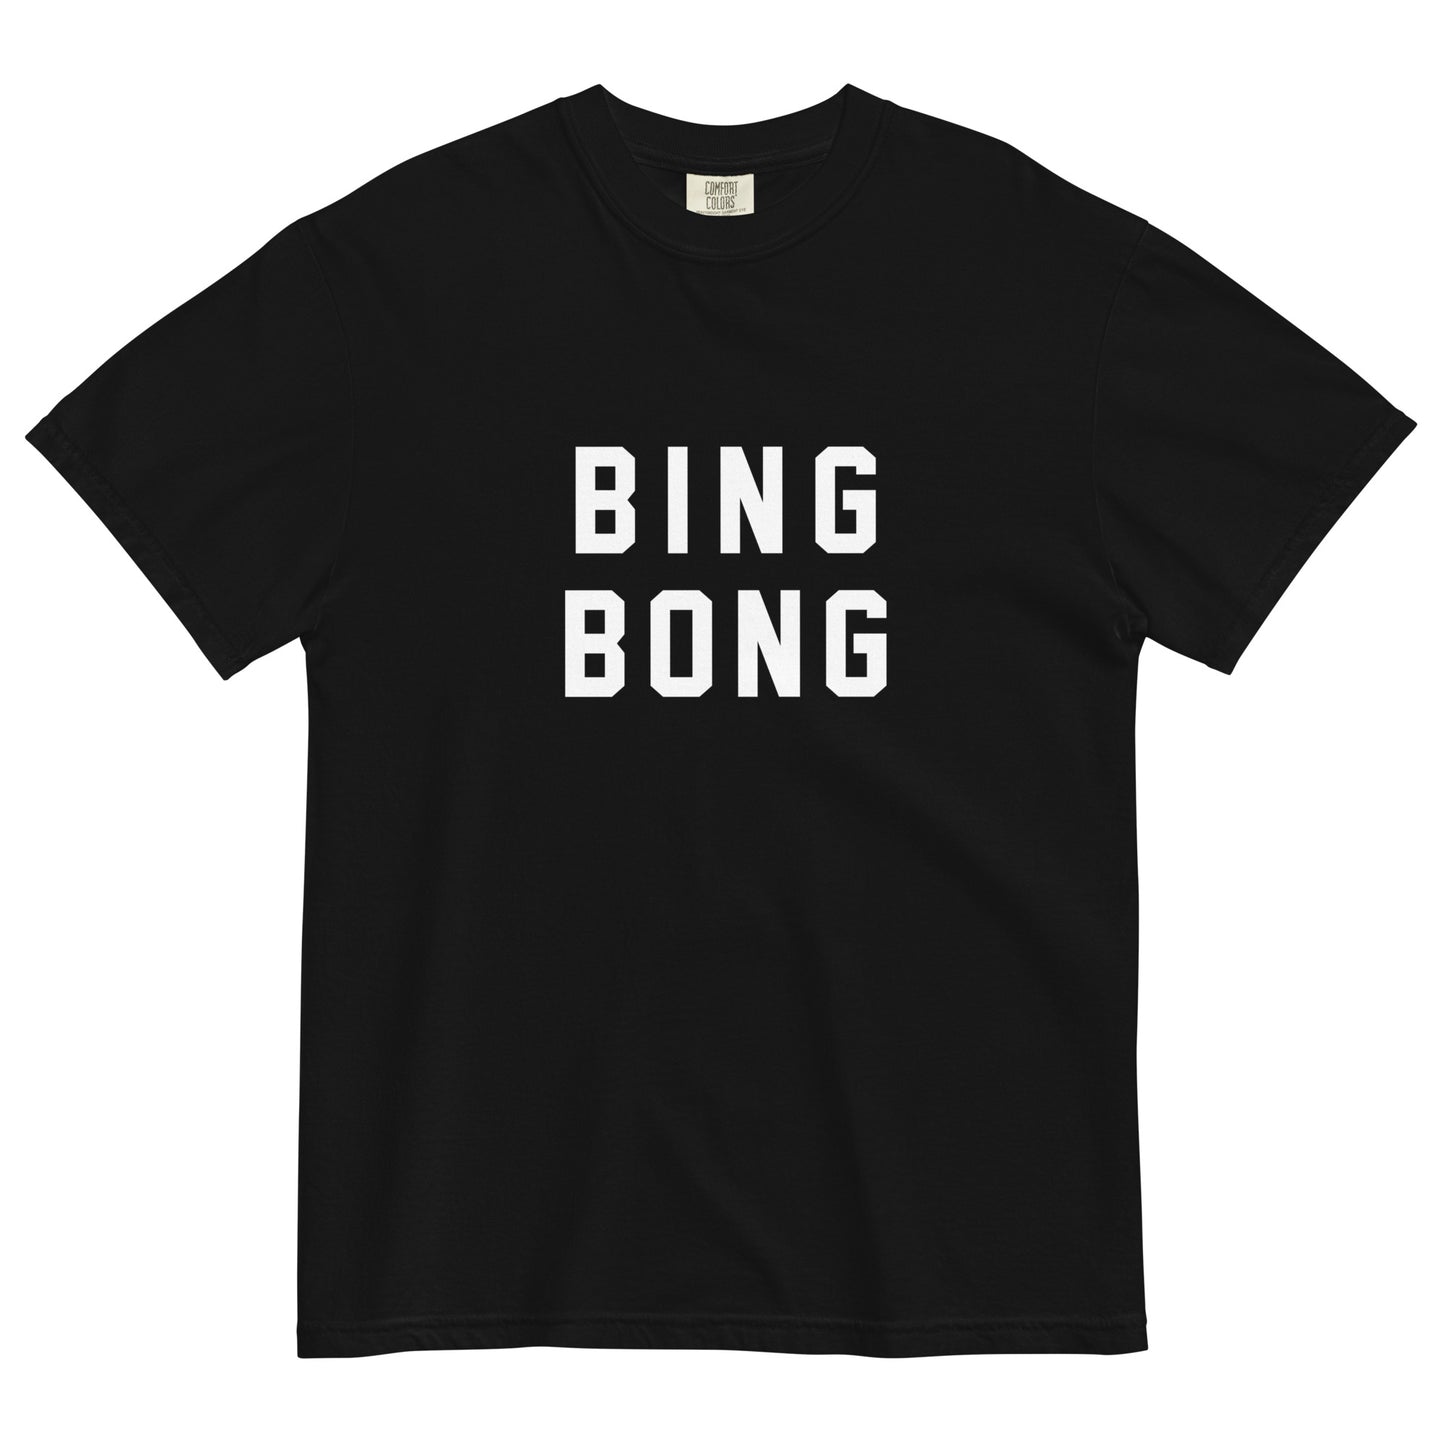 BING BONG